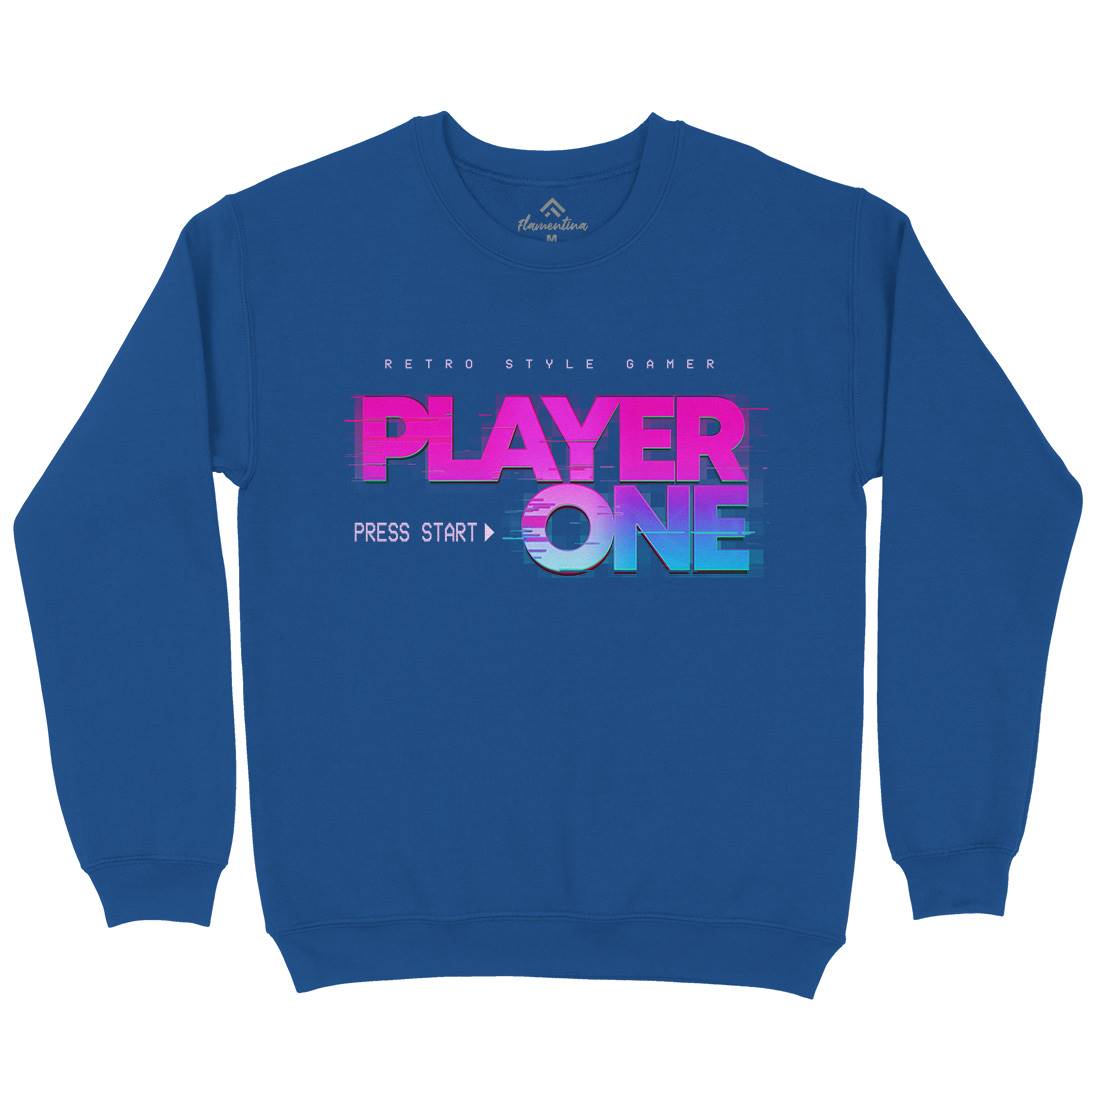 Player One Kids Crew Neck Sweatshirt Geek B997